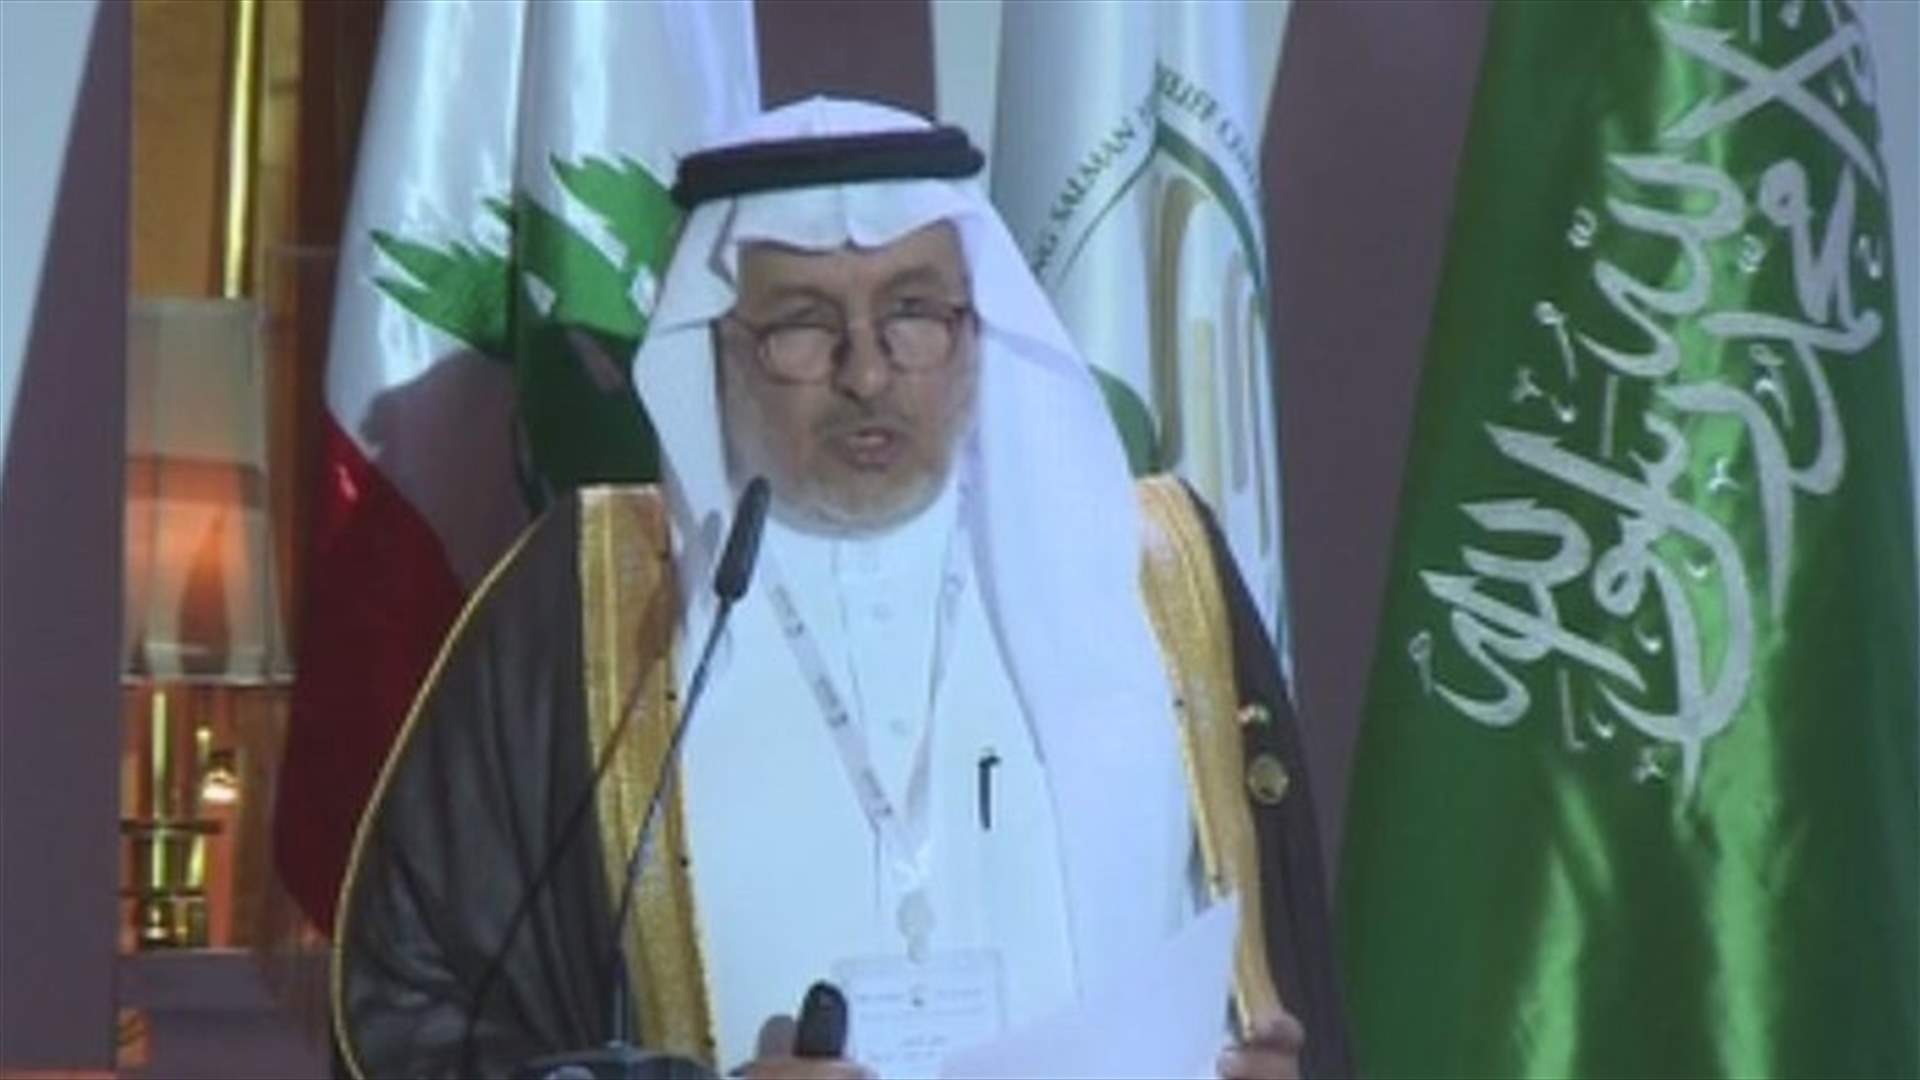 Al Rabeeah says Saudi Arabia values Lebanon’s role in hosting Syrian refugees ​​